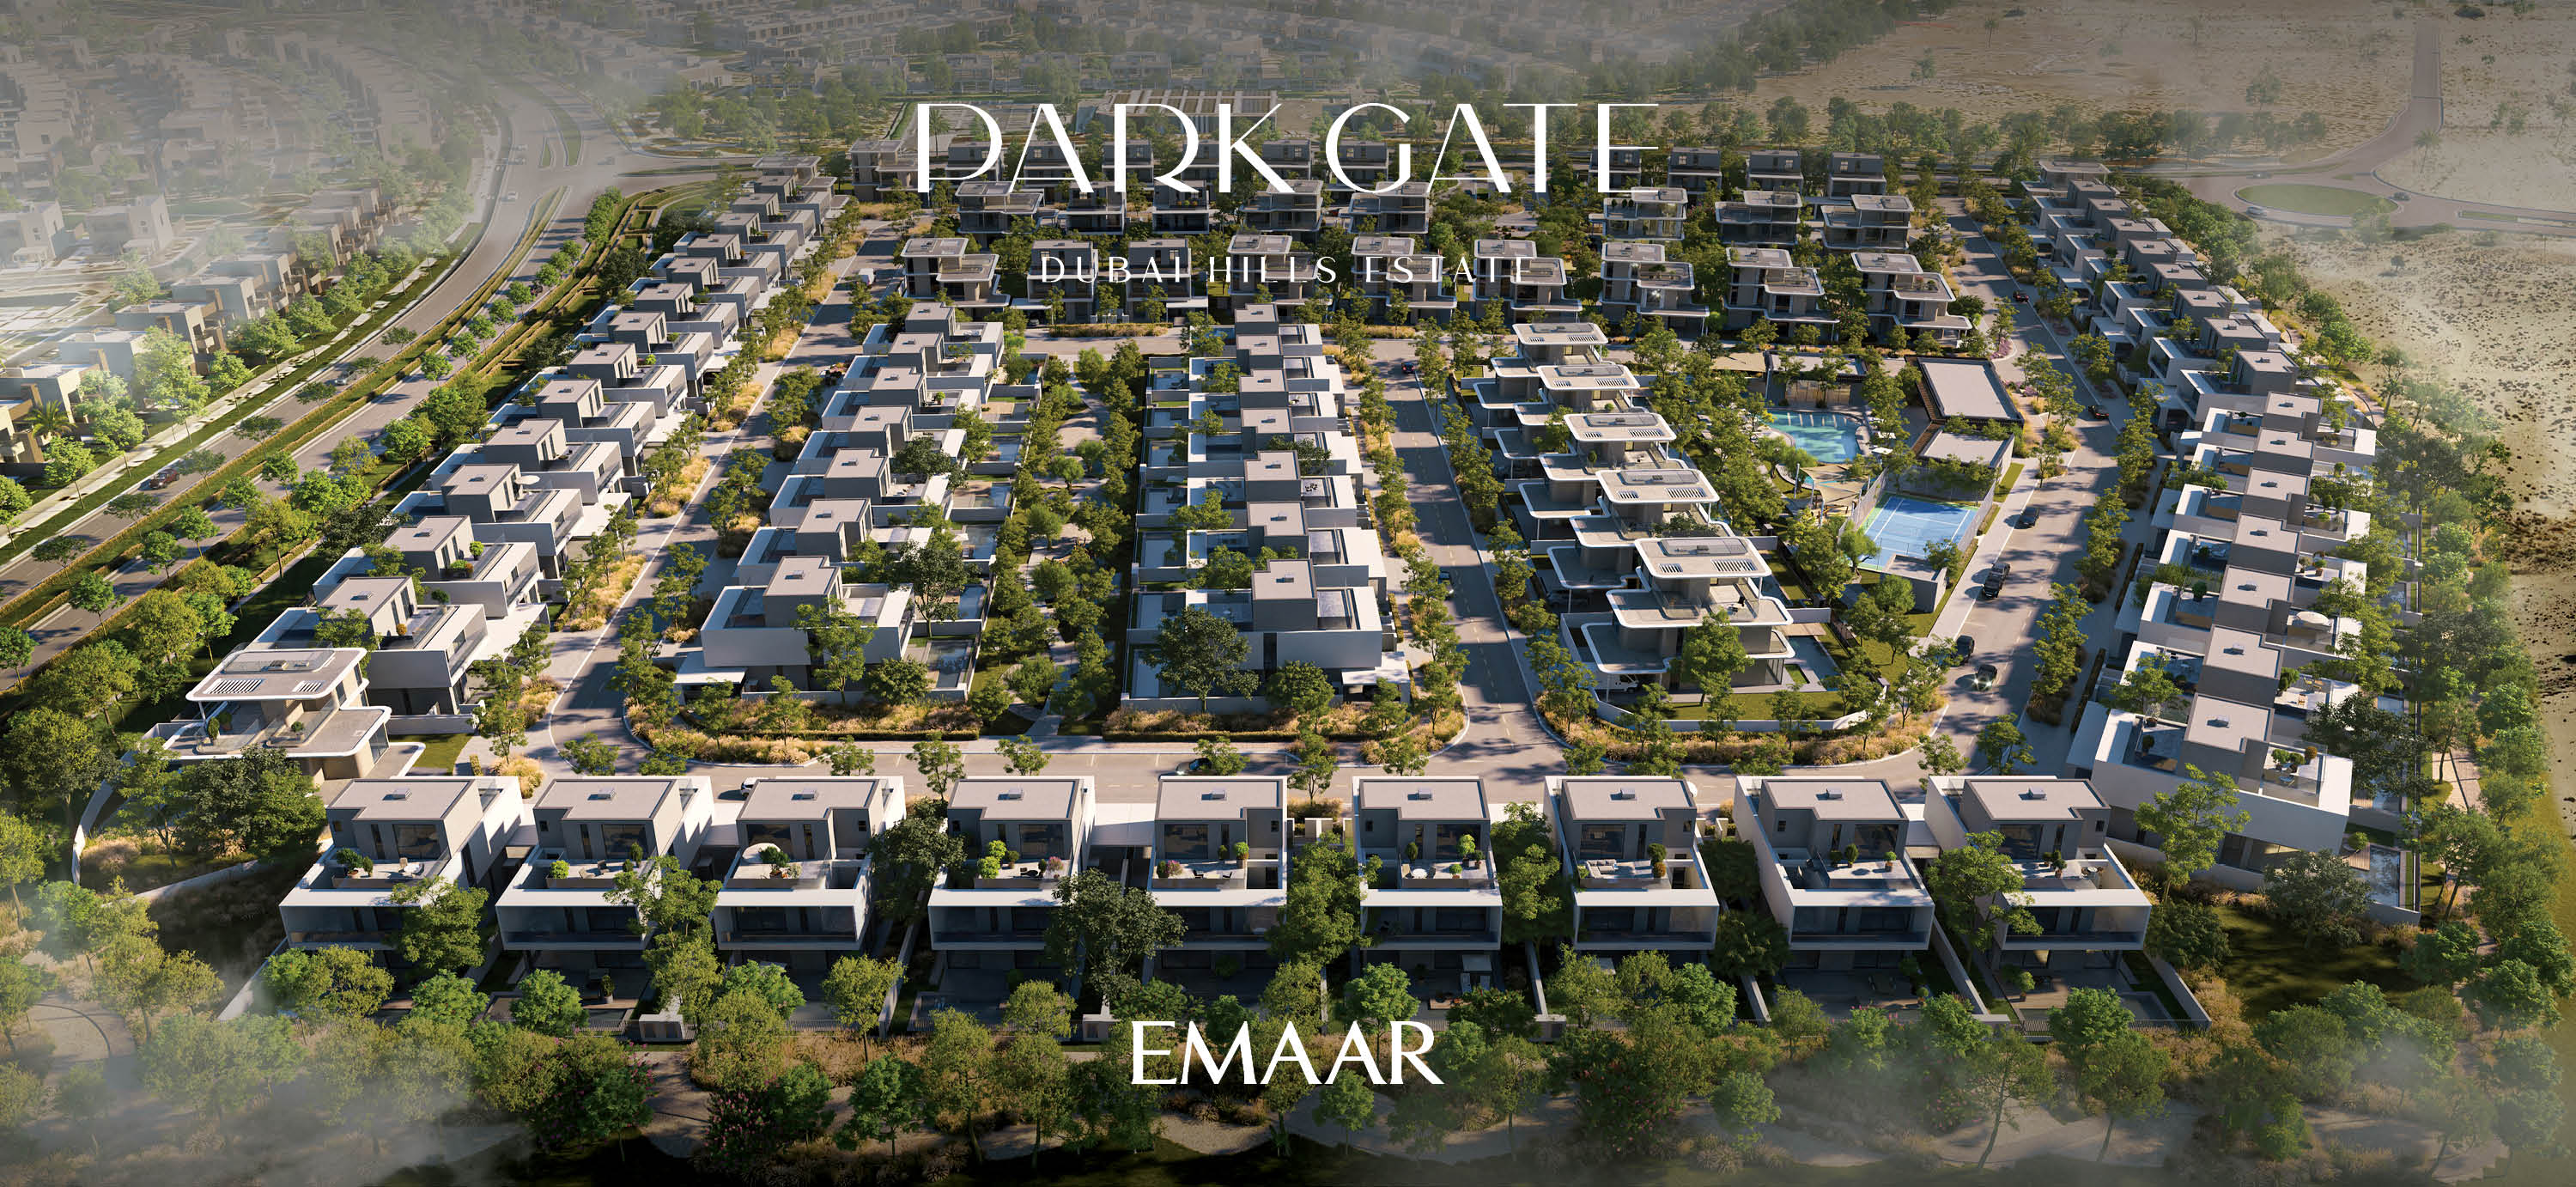 Park Gate by Emaar in Dubai Hills Estate.